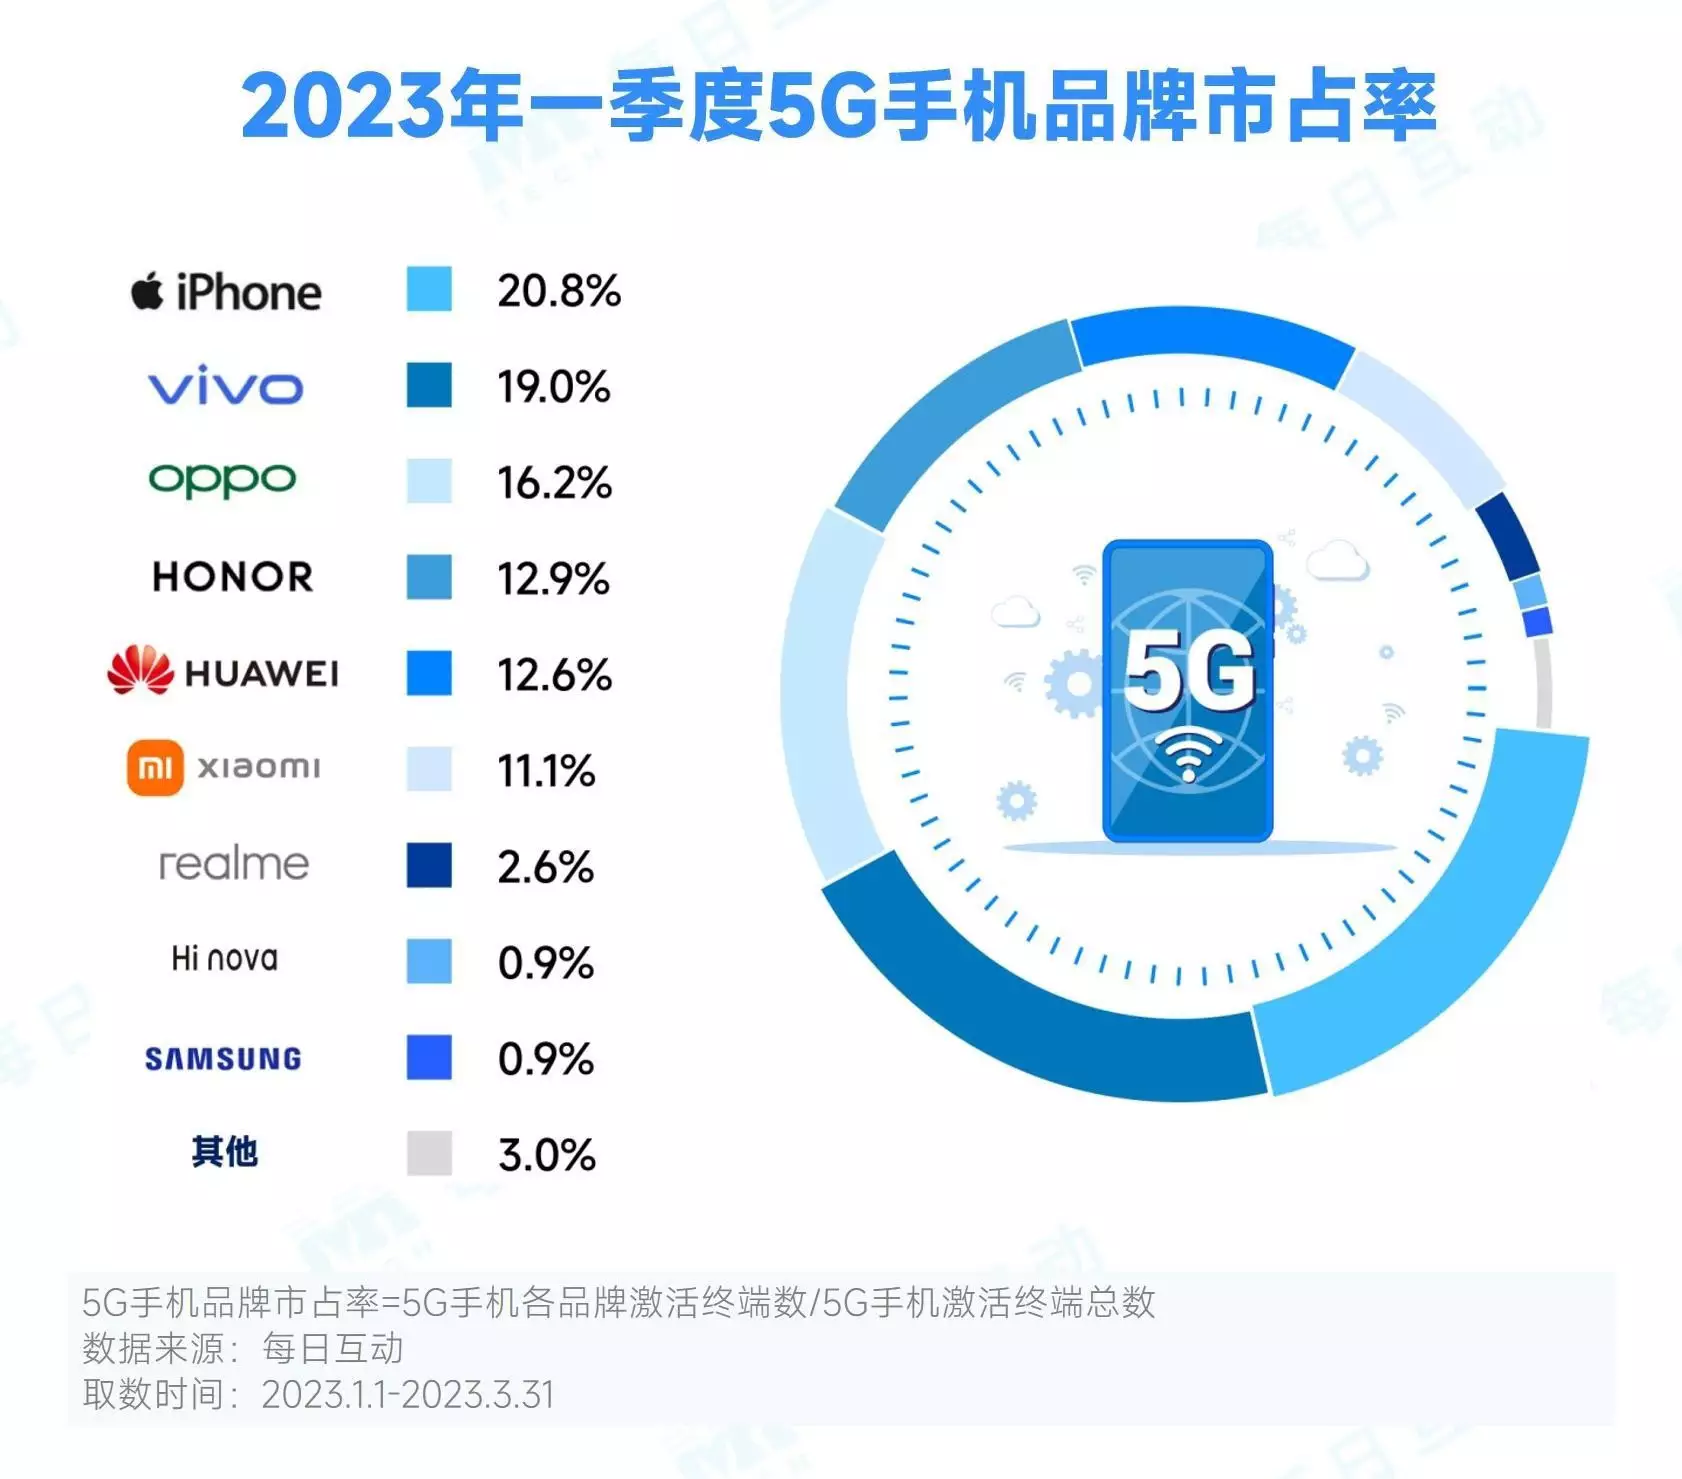 Huawei 5G smartphone 2023